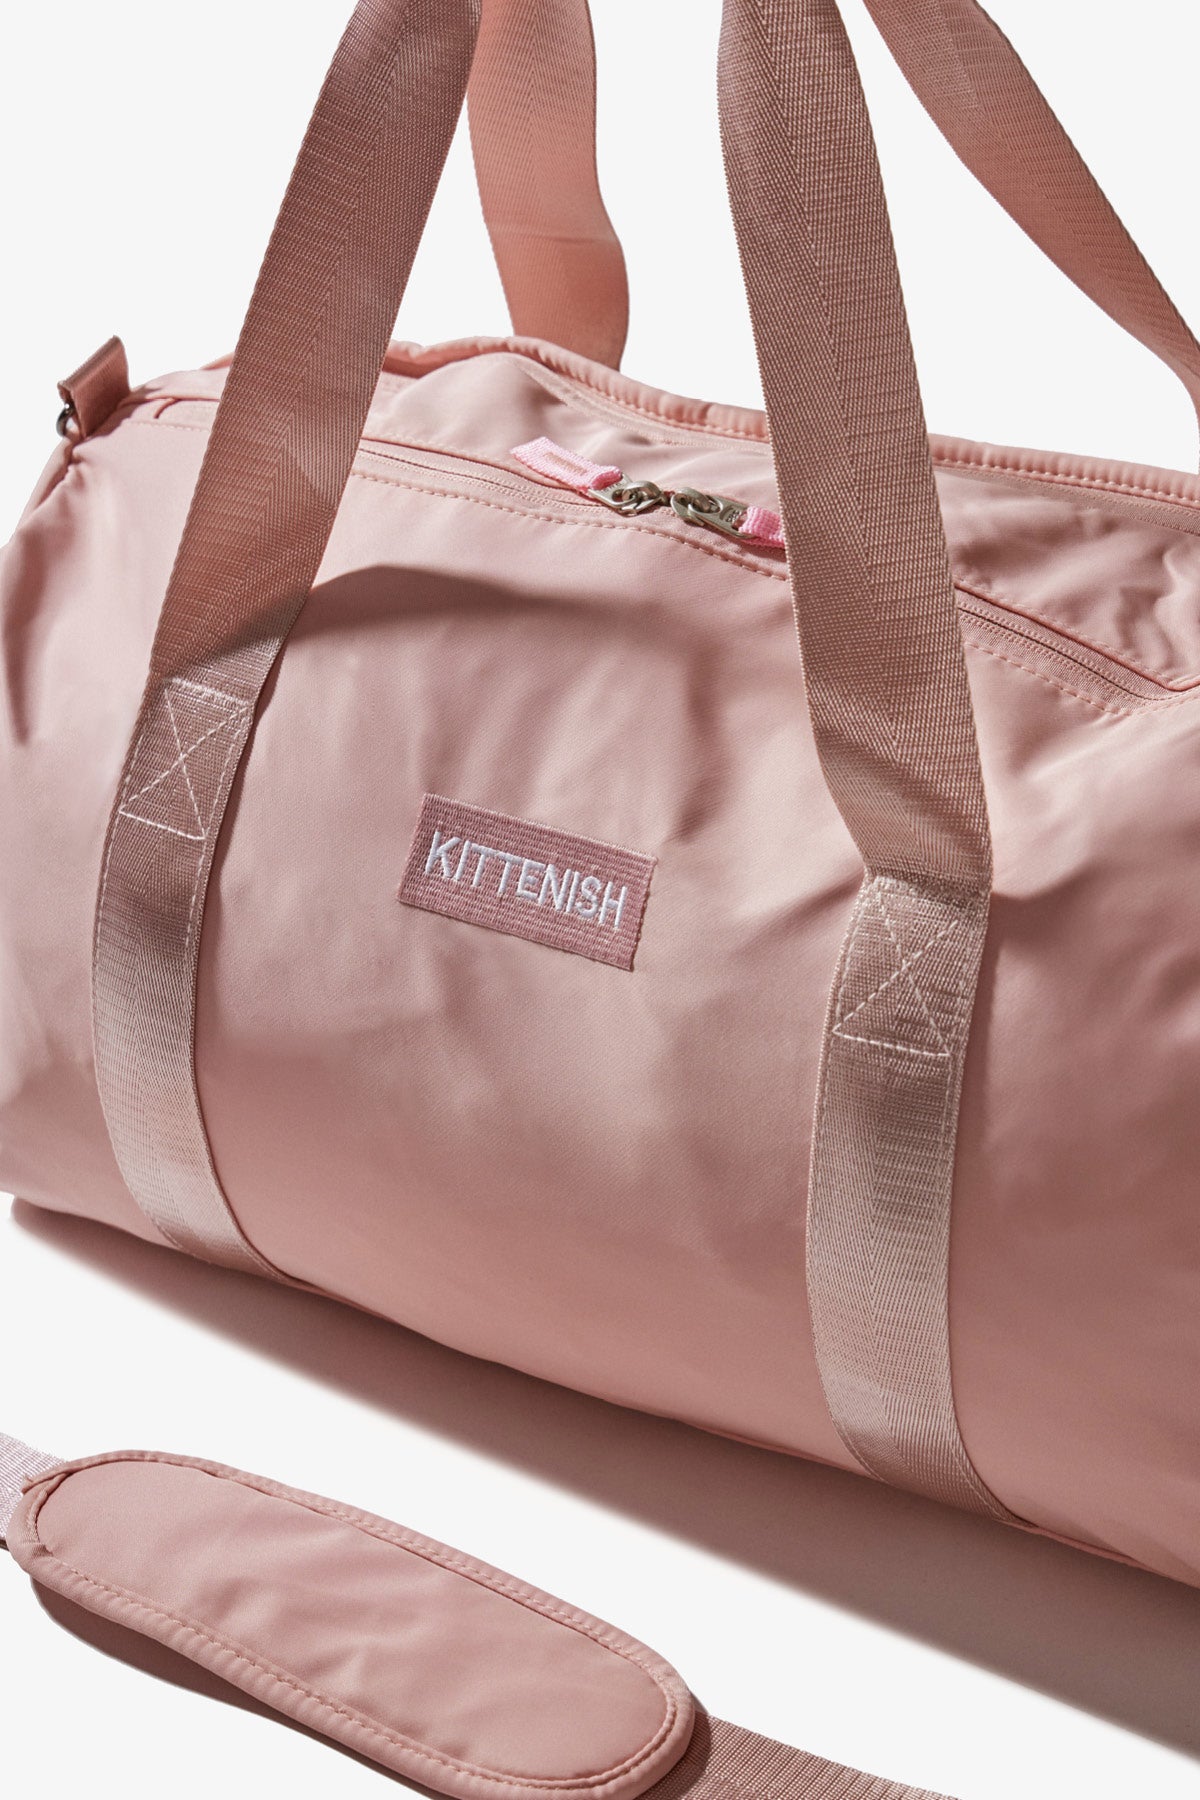 KITTENISH PINK DUFFLE BAG – Kittenish